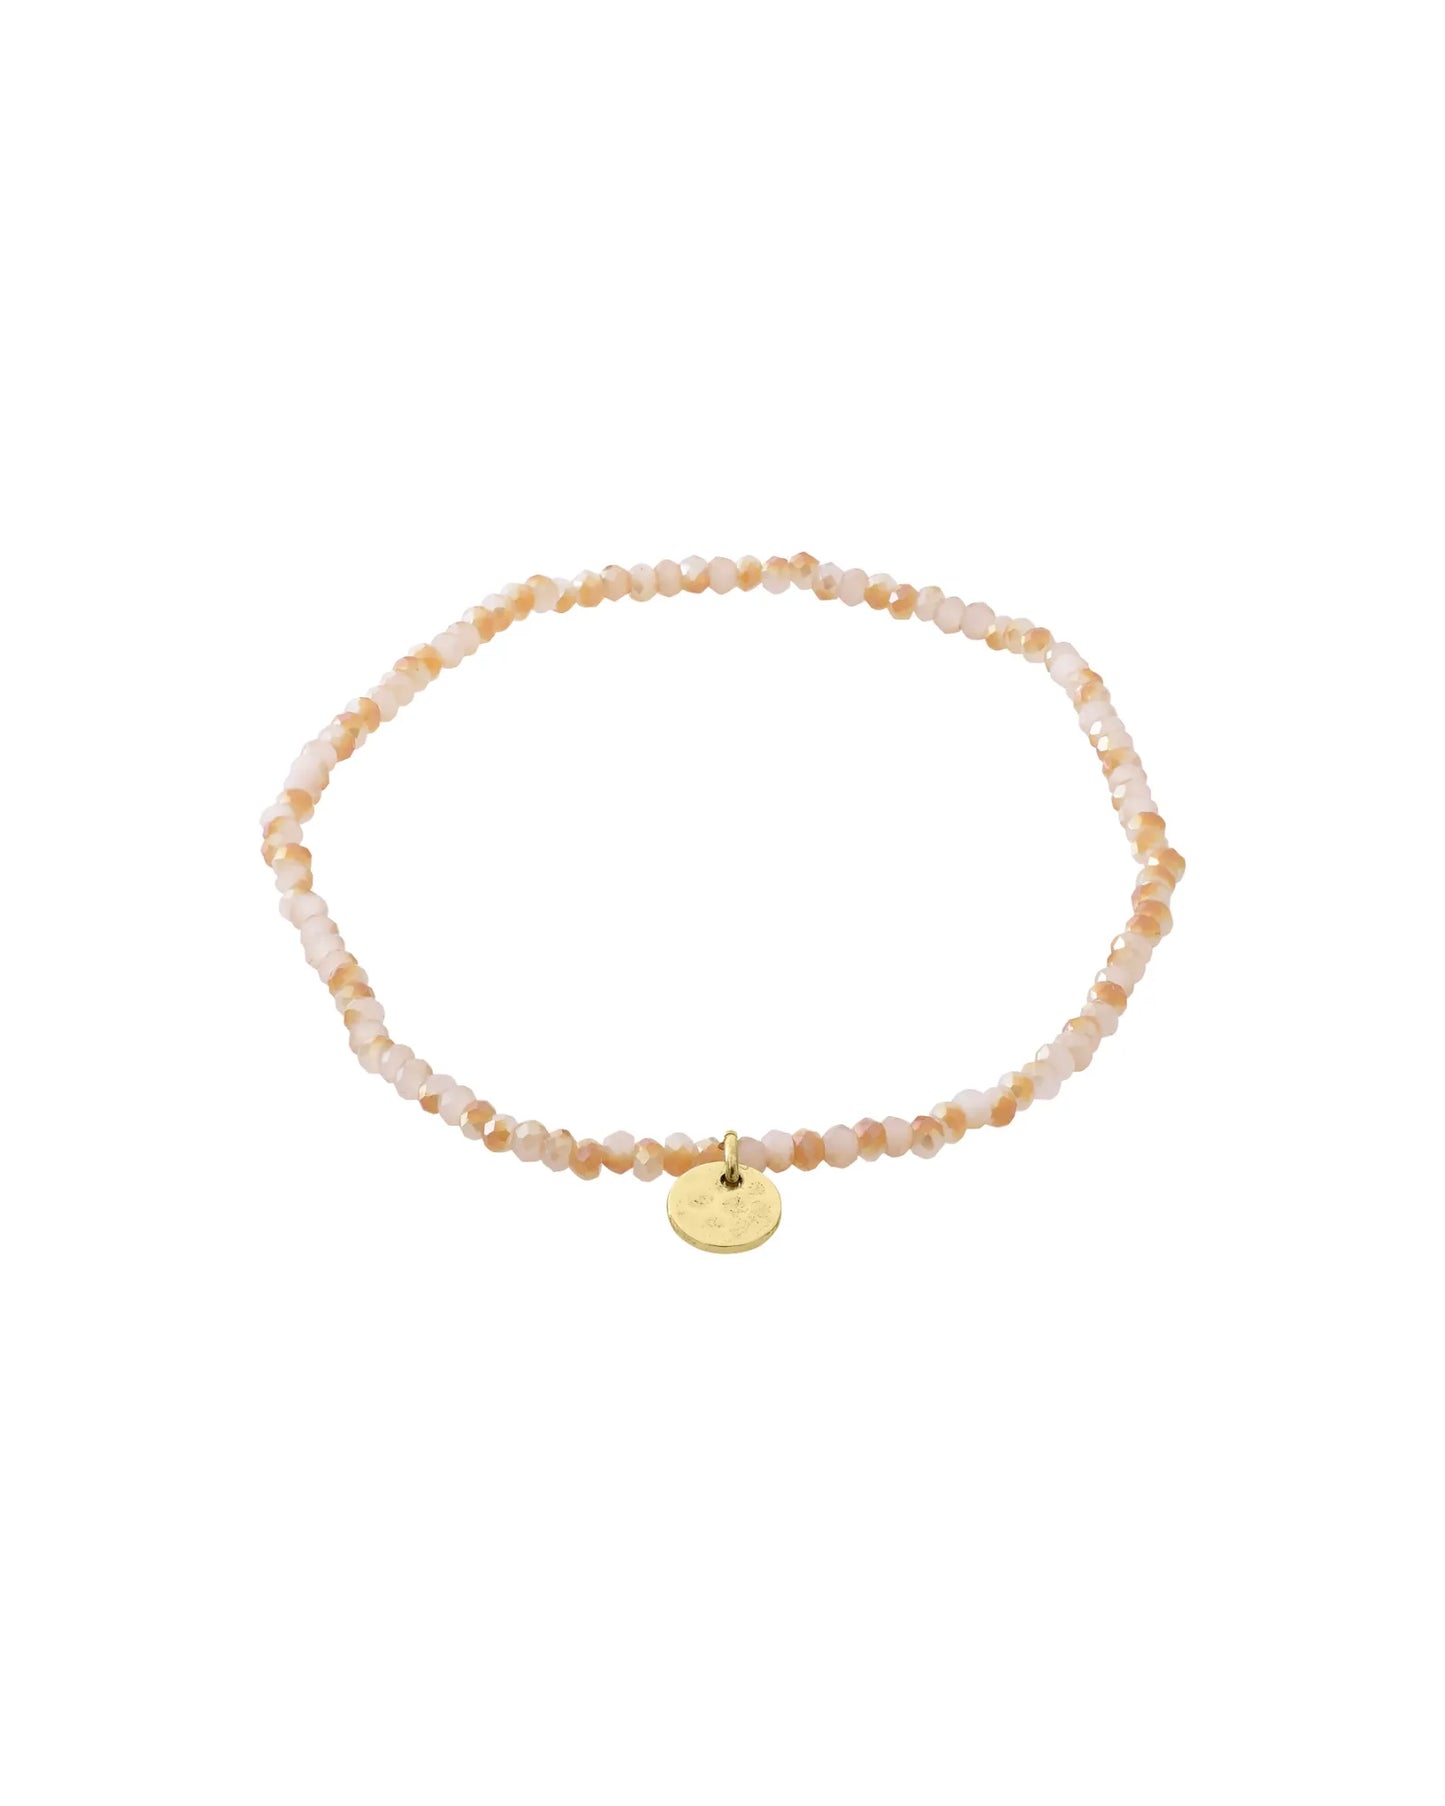 INDIE Bracelet - Rose/Gold Plated